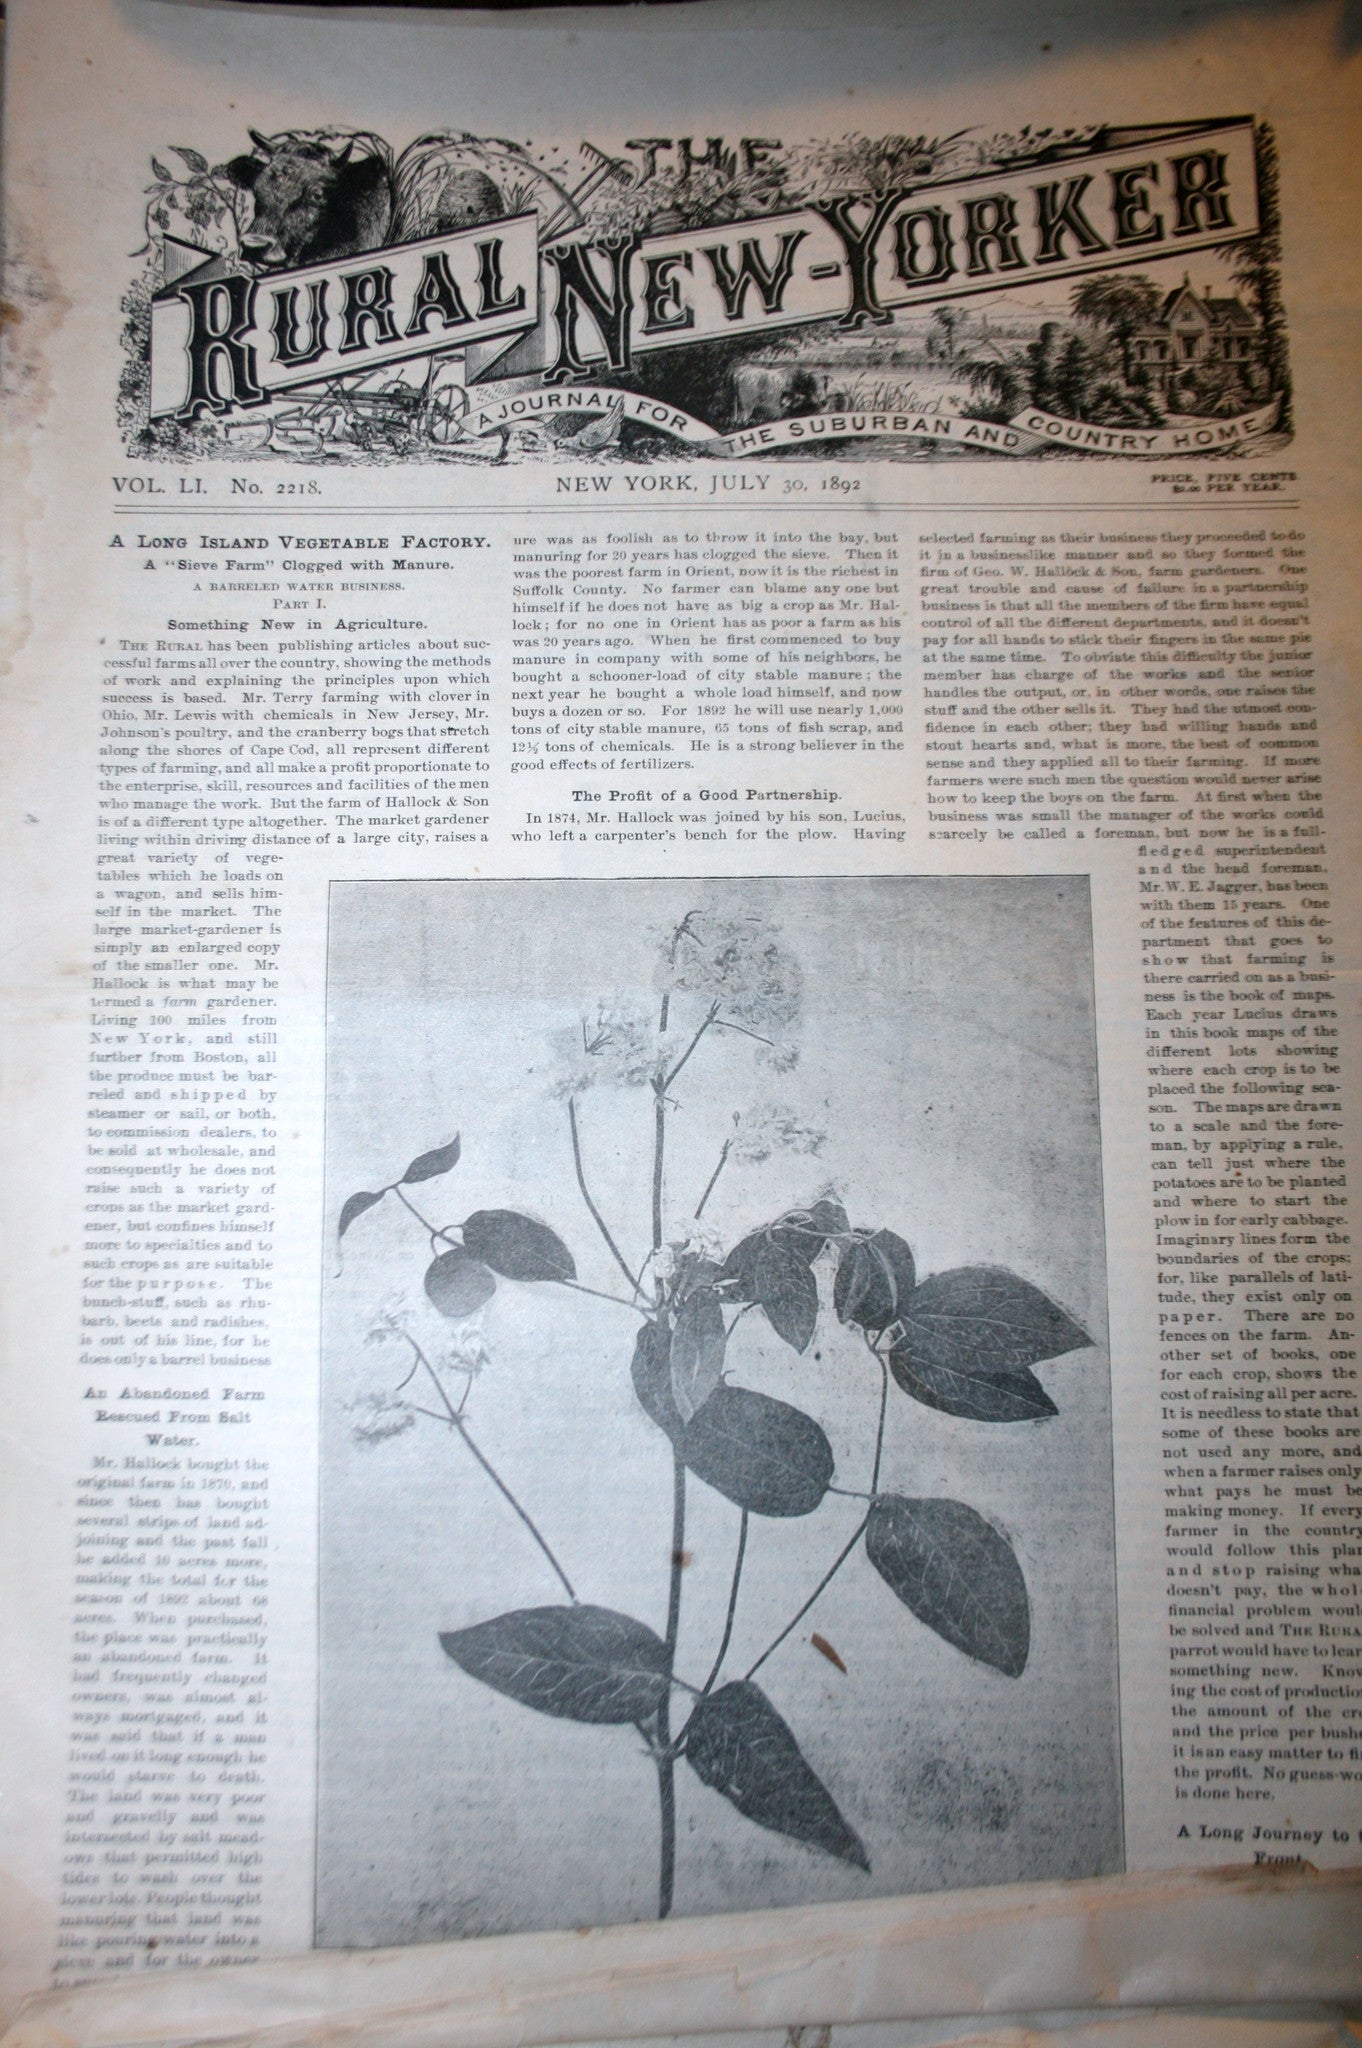 07 31 1893 NEWS Rural New-Yorker